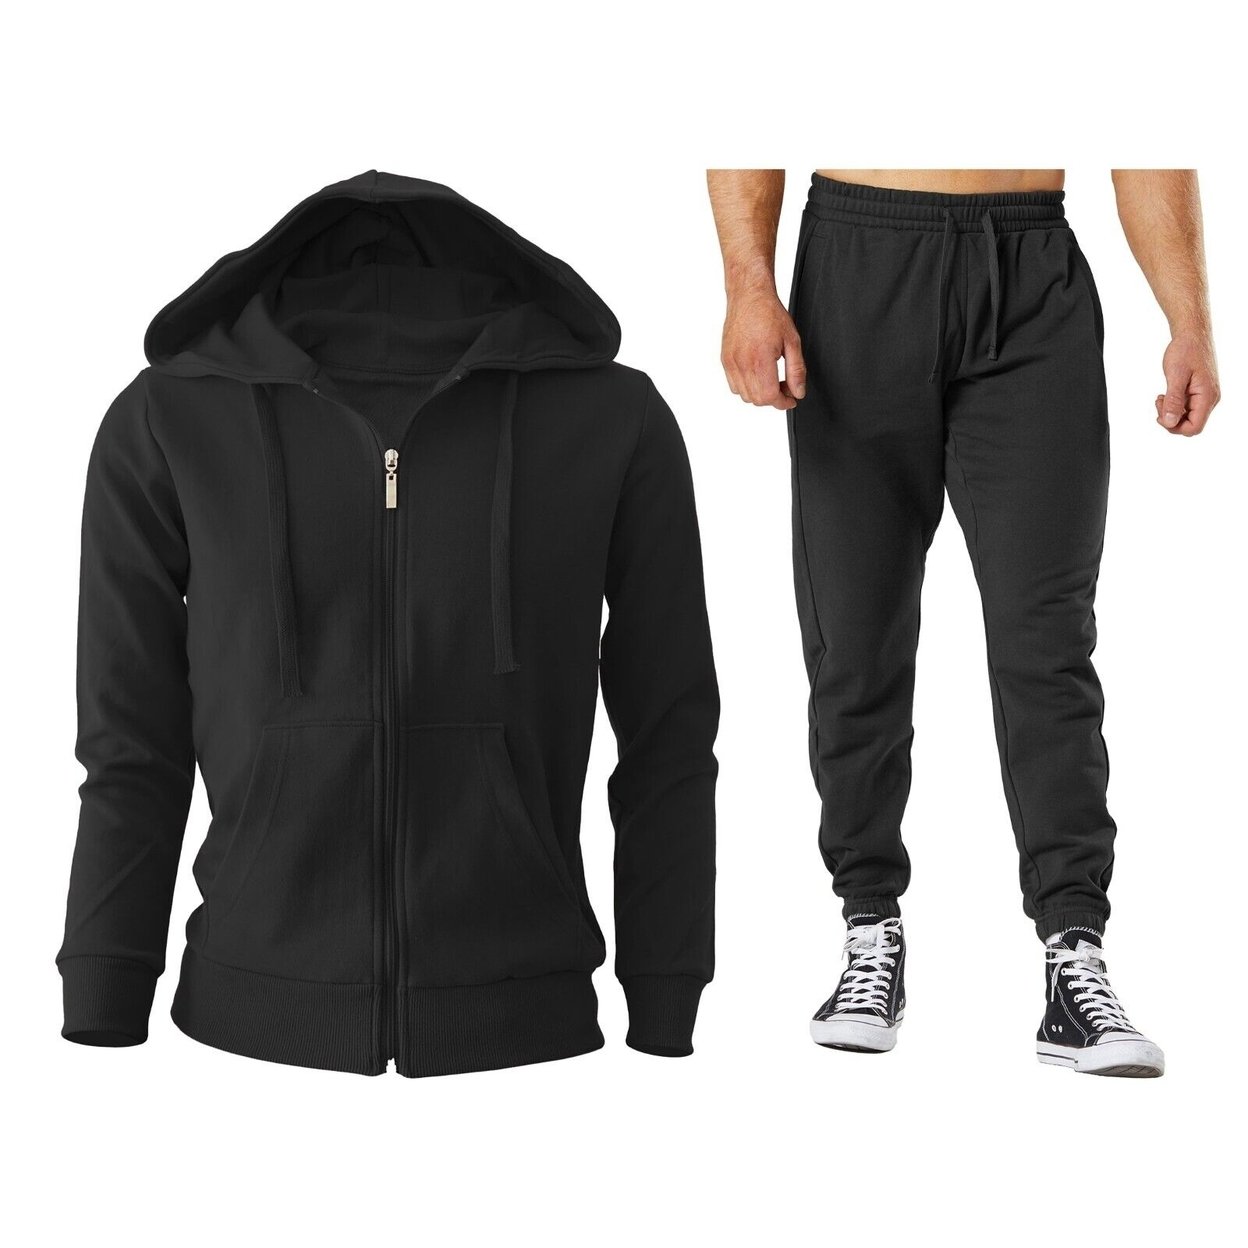 2/4-Piece: Men's Winter Warm Cozy Athletic Multi-Pockets BIG & TALL Sweatsuit Set - Black, 2, X-large